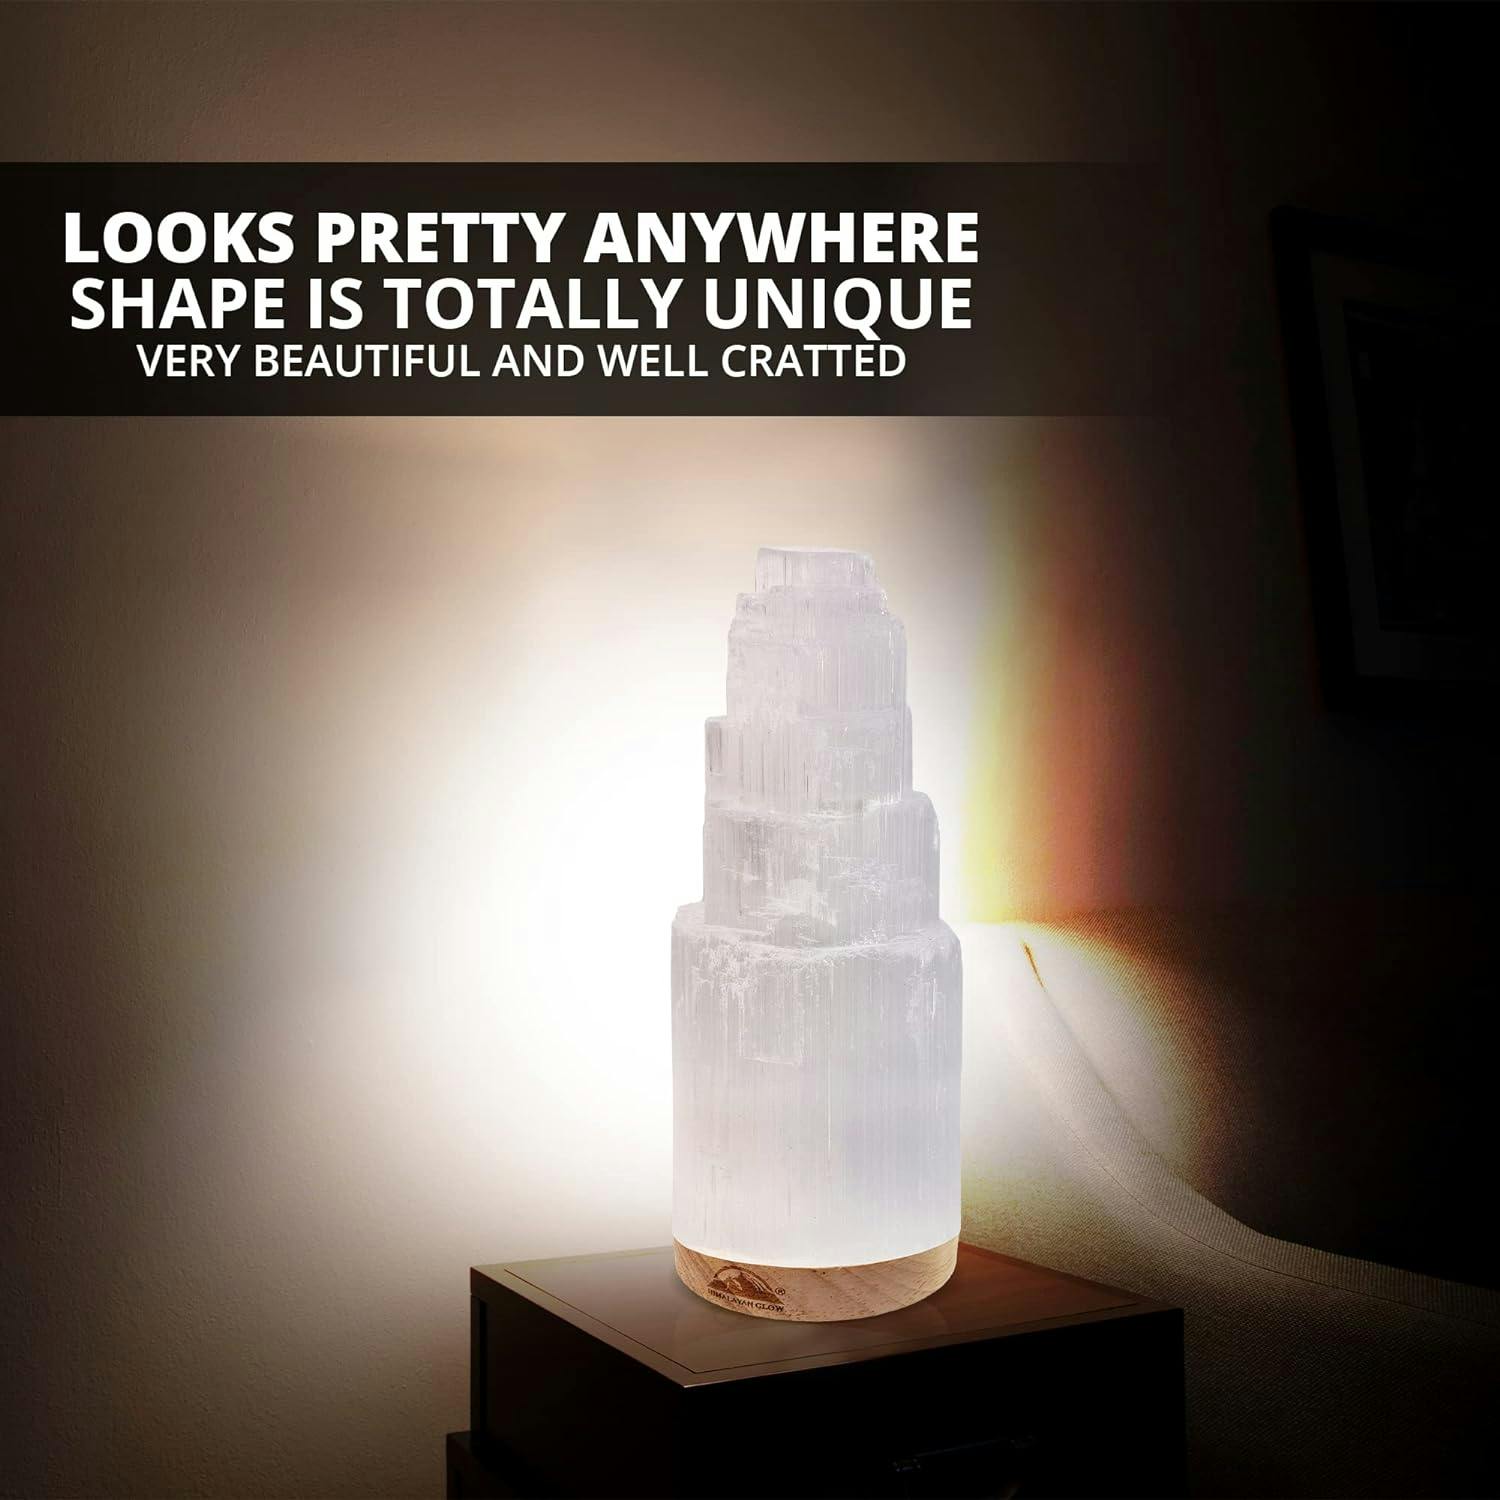 20cm Selenite Crystal Desk Lamp with Wooden Base - White